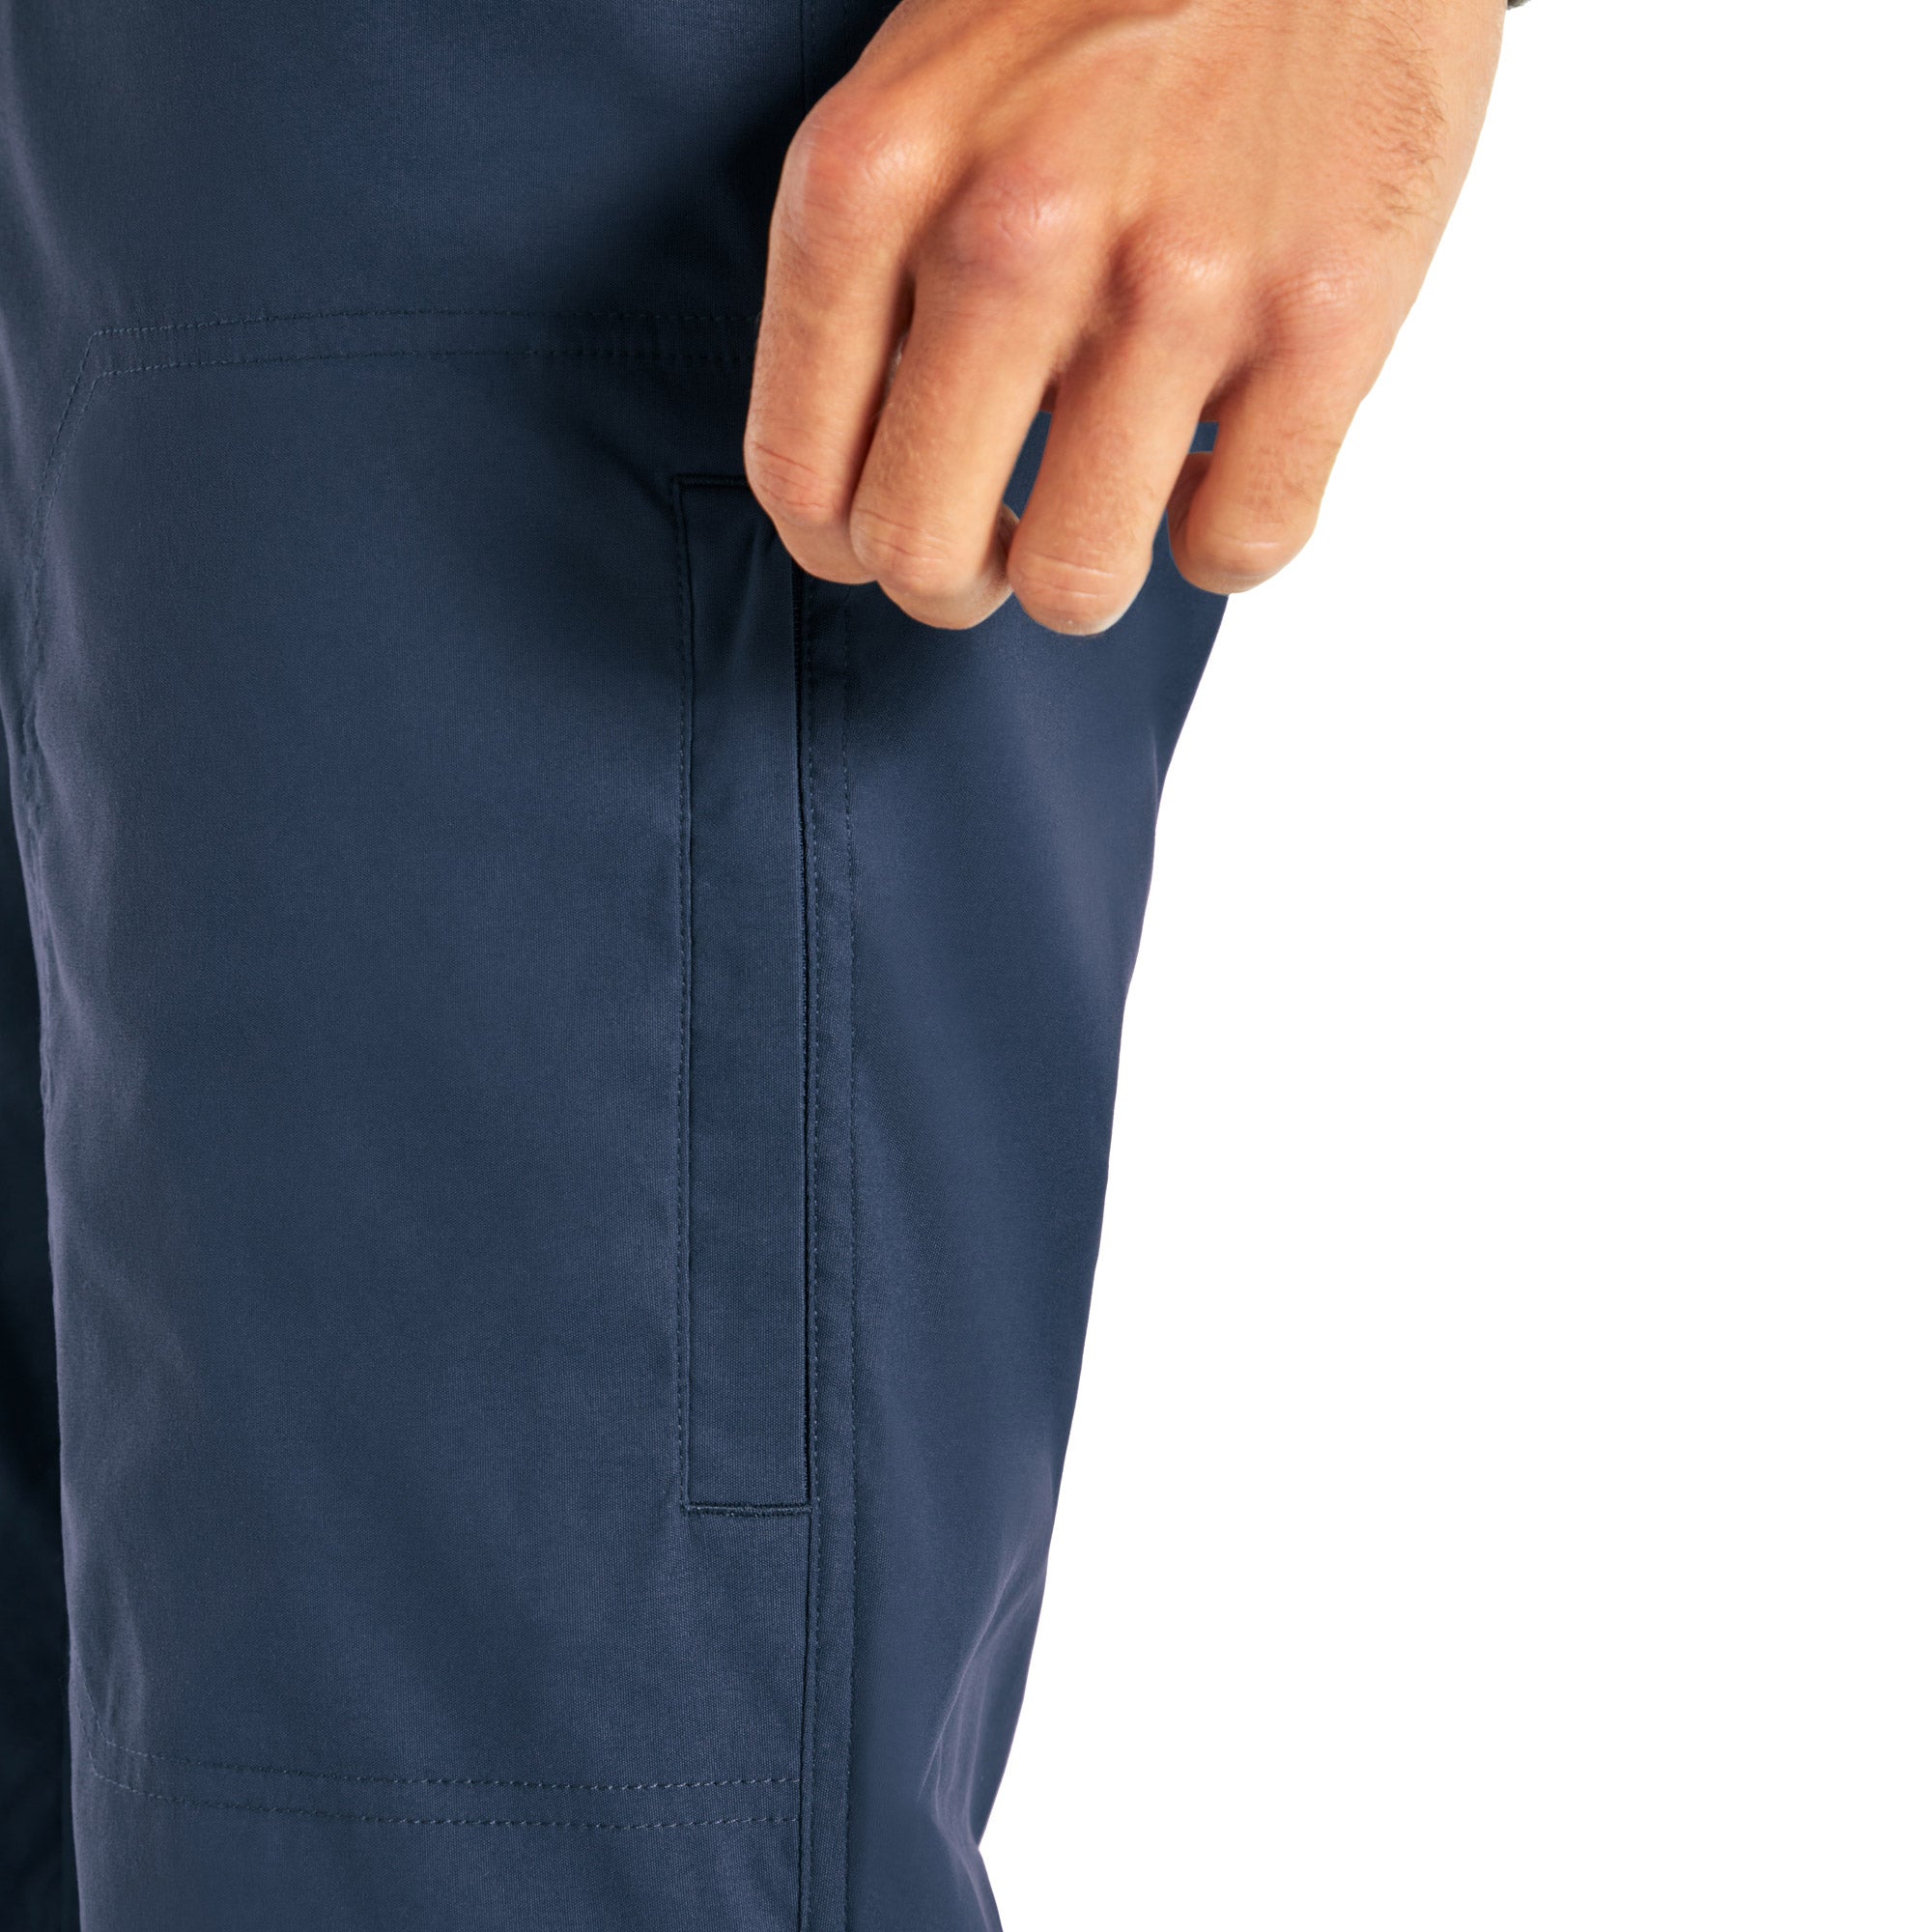 BNWT Orvis Fleece Lined Men's Pants, Size 34X30, Pick color